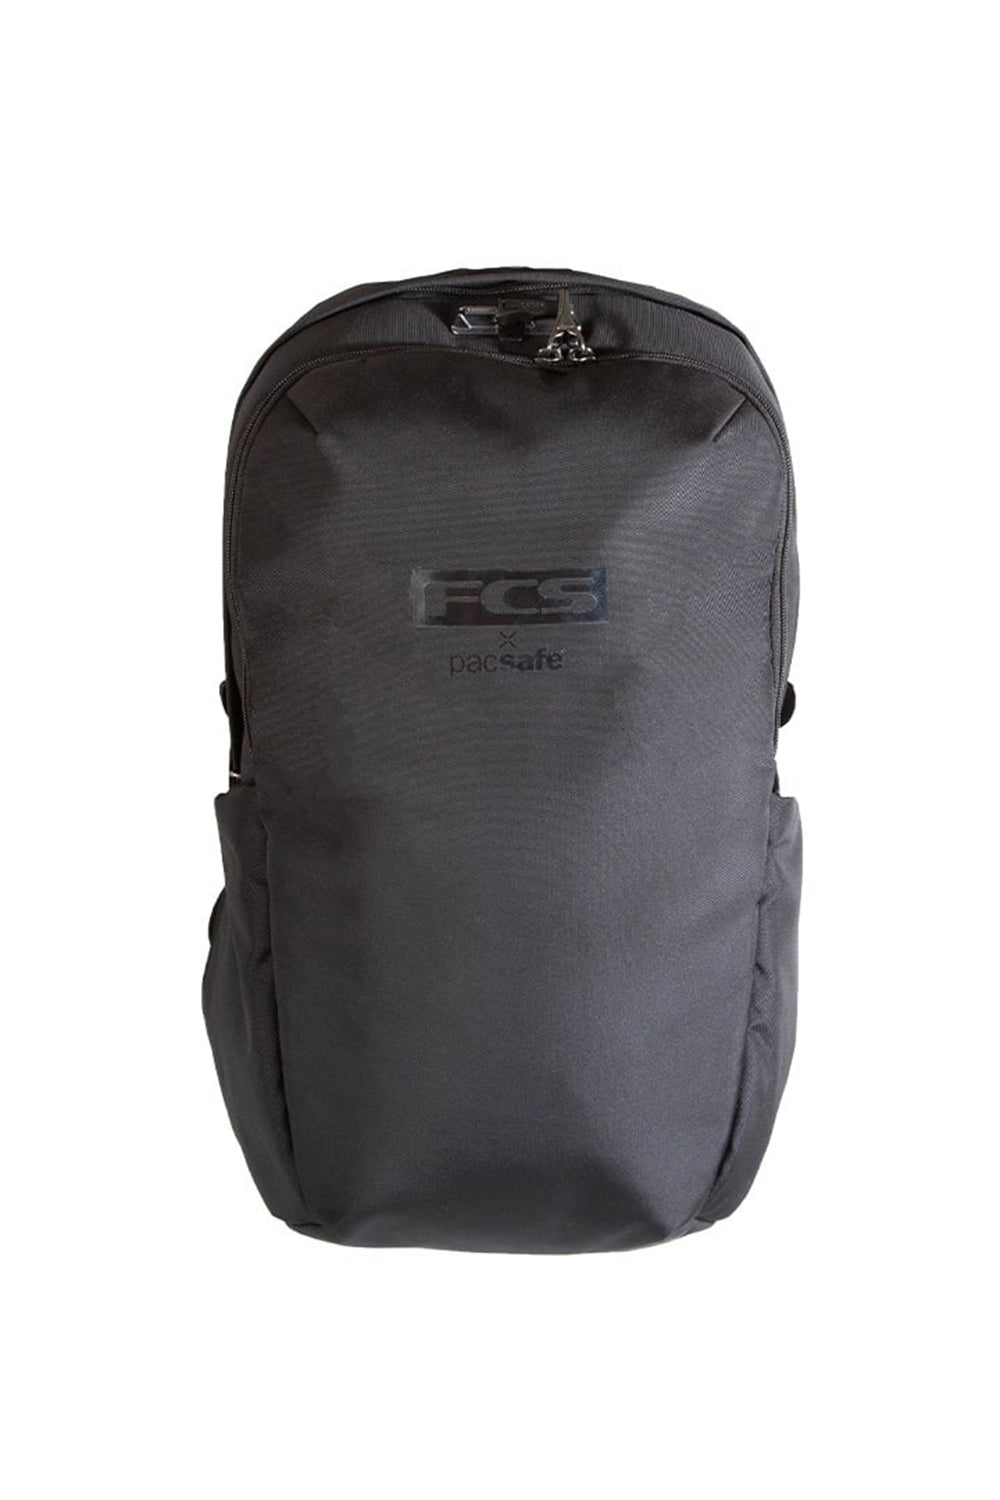 FCS Pacsafe Roam 25L Backpack